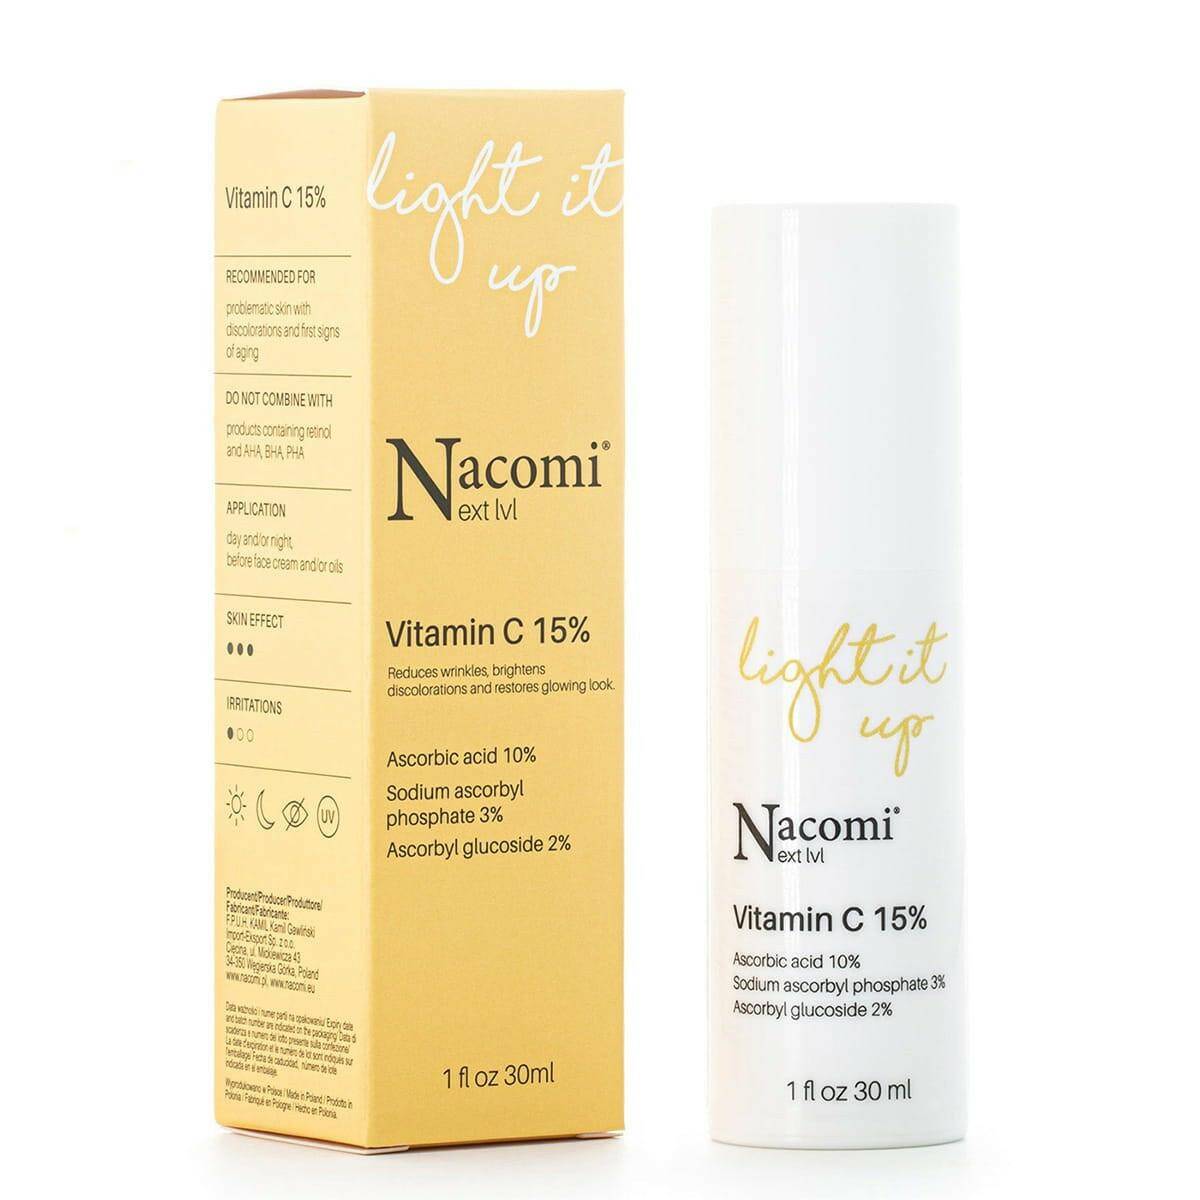 Nacomi next lvl serum Vitamin C 15% 30ml